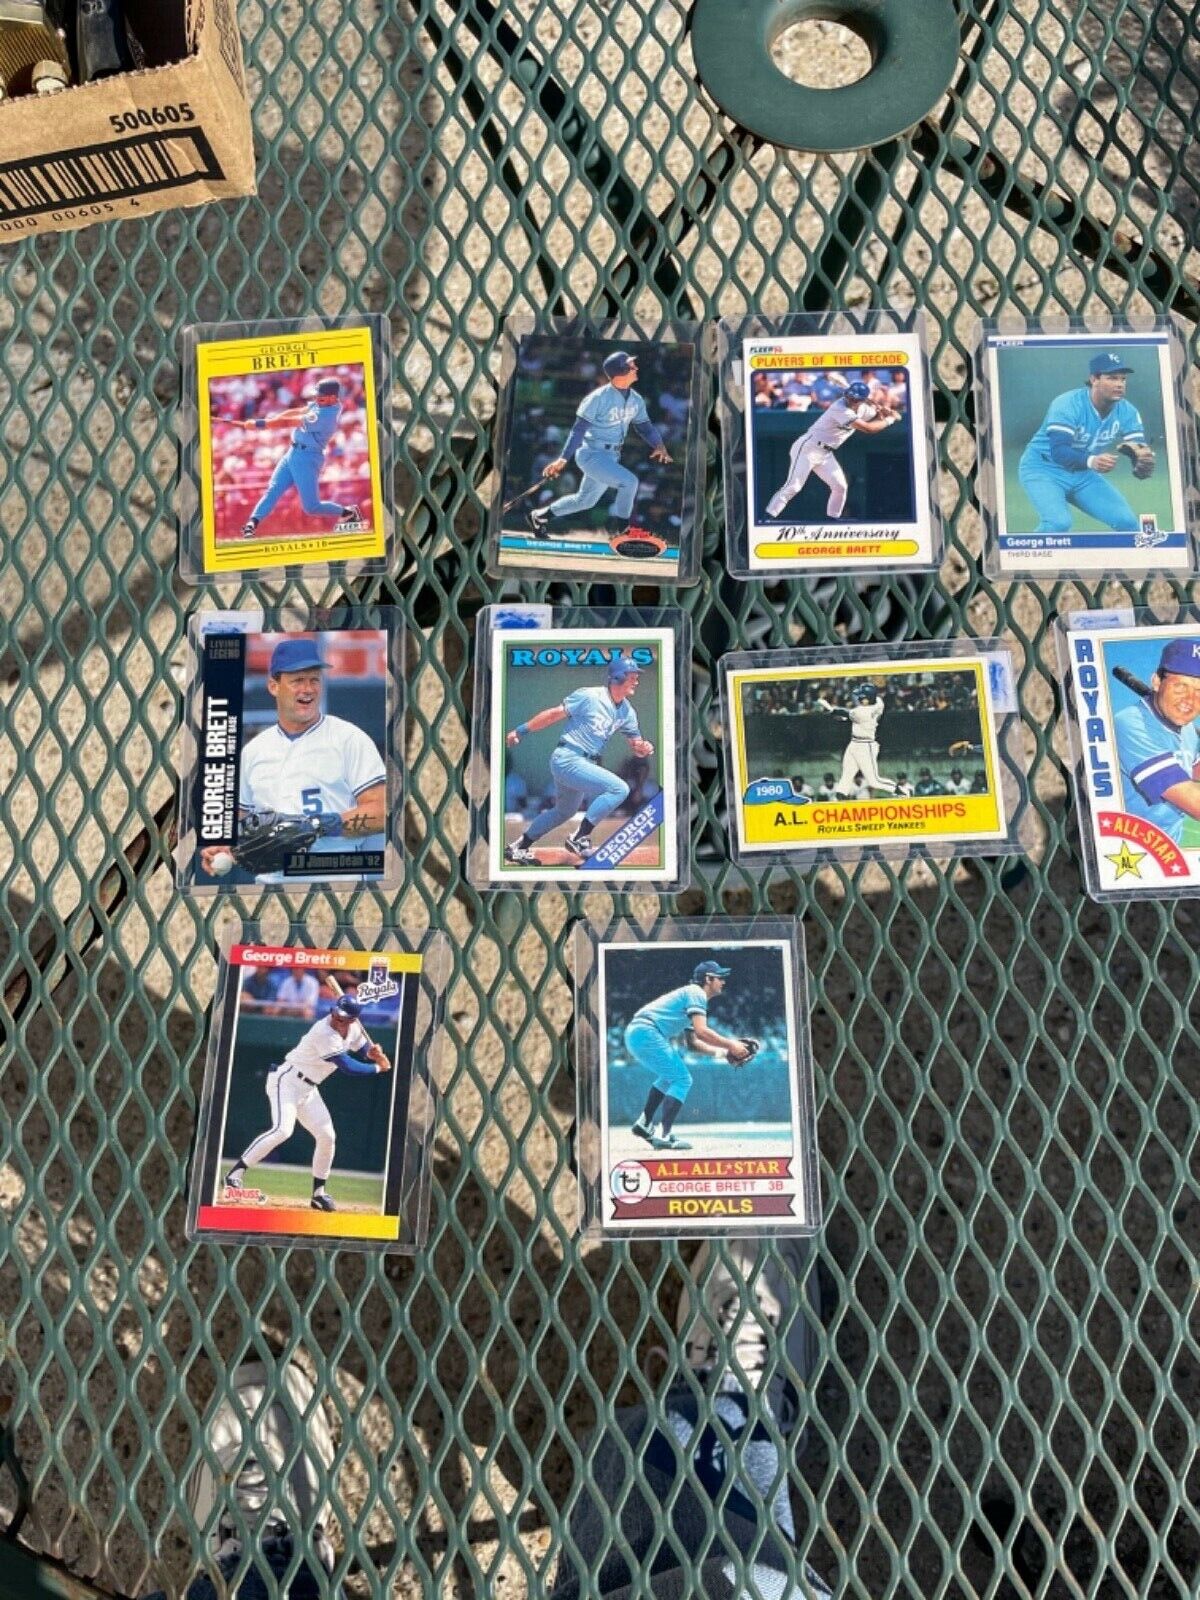 Lot of 10 George Brett Baseball Cards in hard plastic sleeves. Без бренда